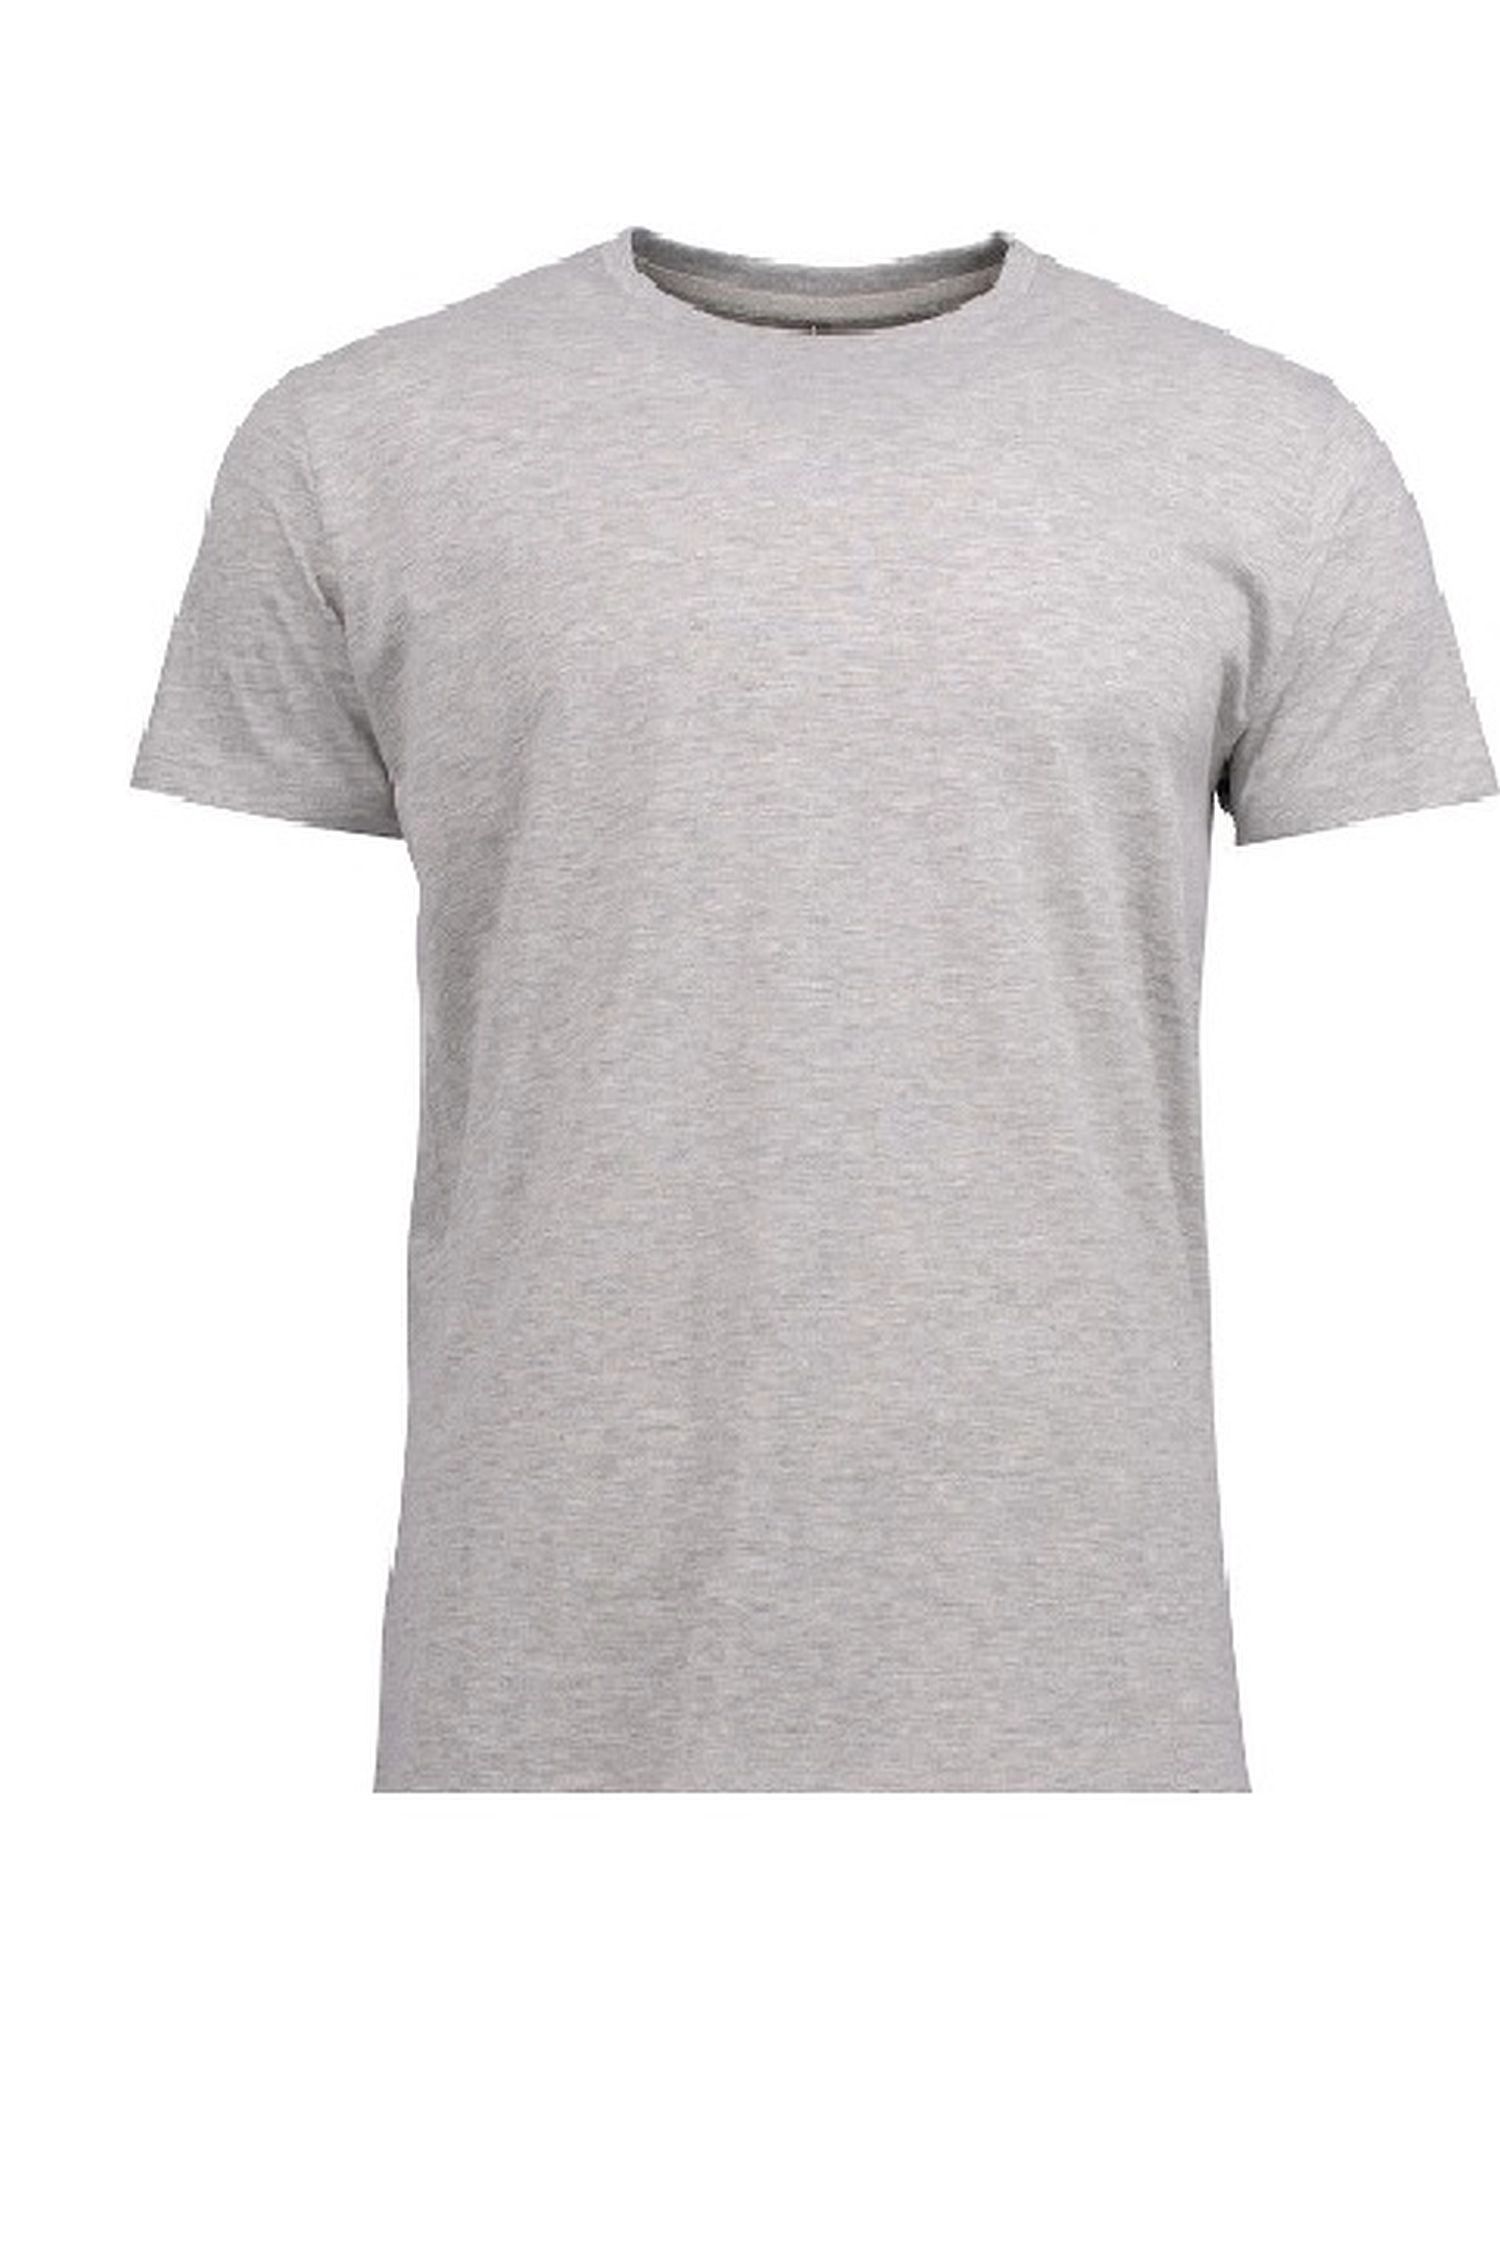 E-shop Pánske tričko 002 grey